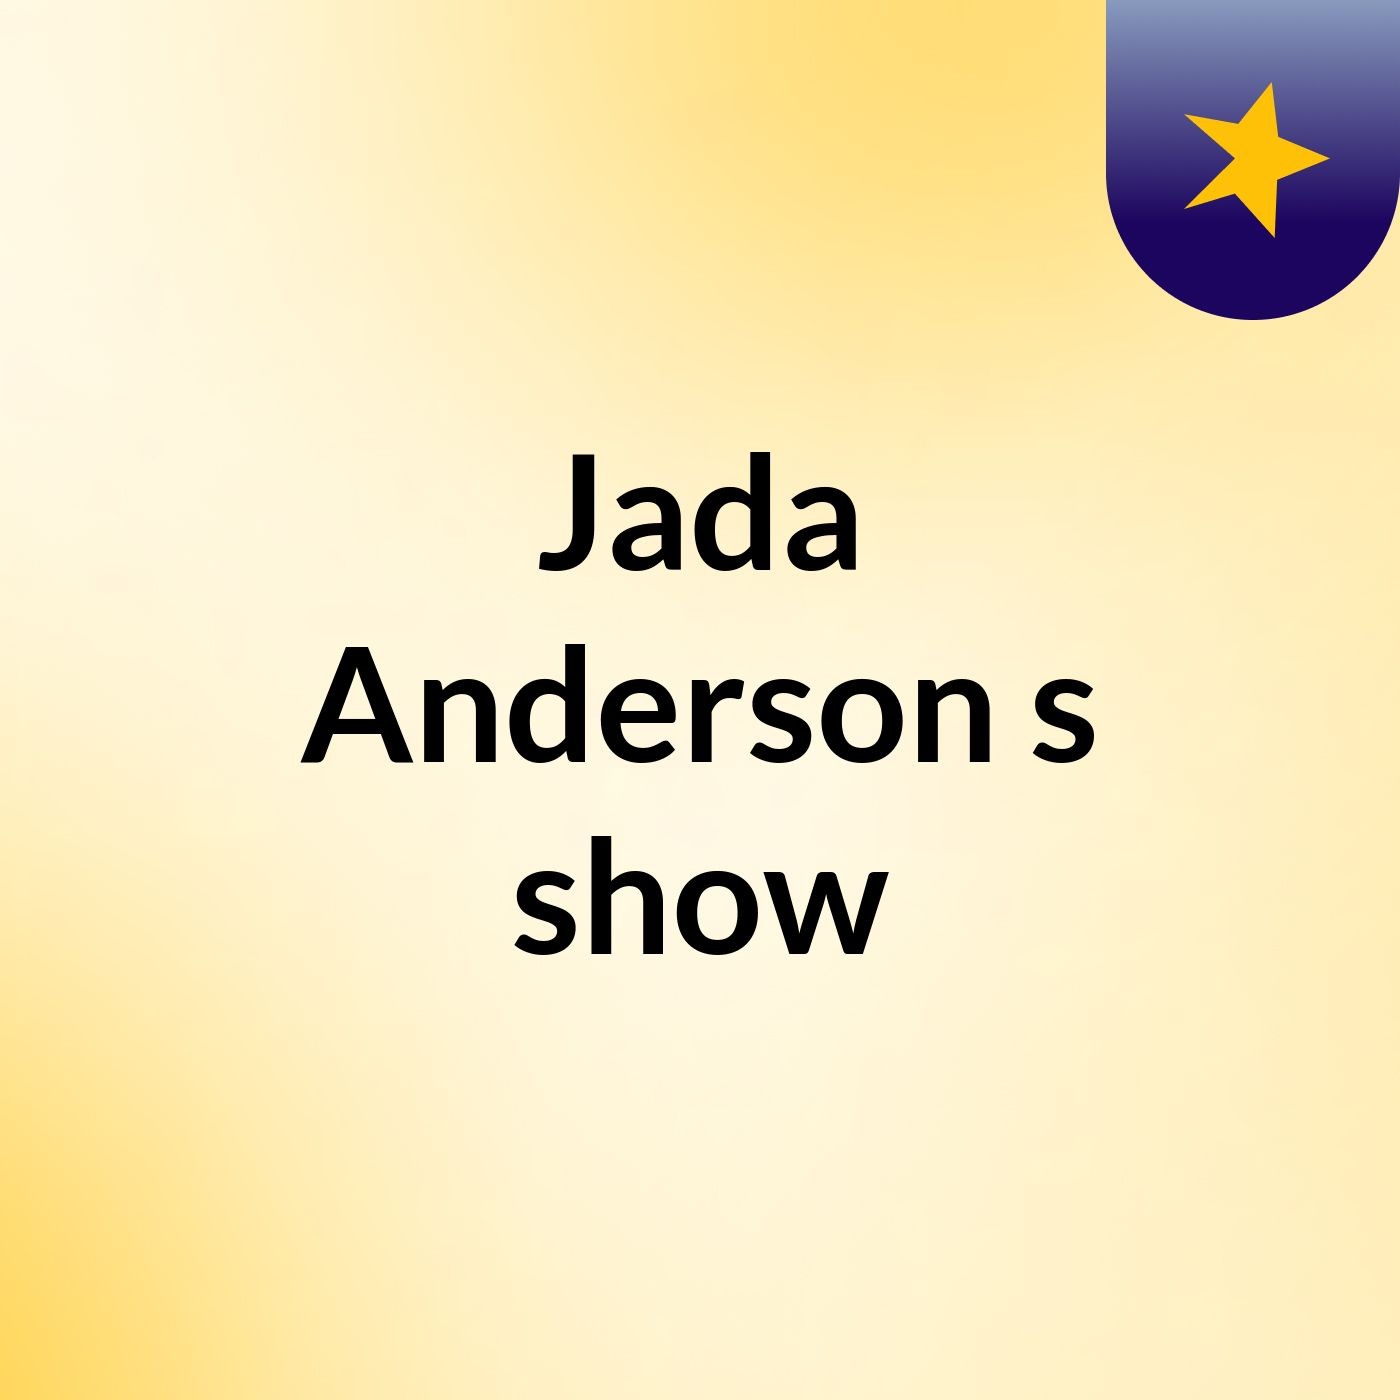 Jada Anderson's show